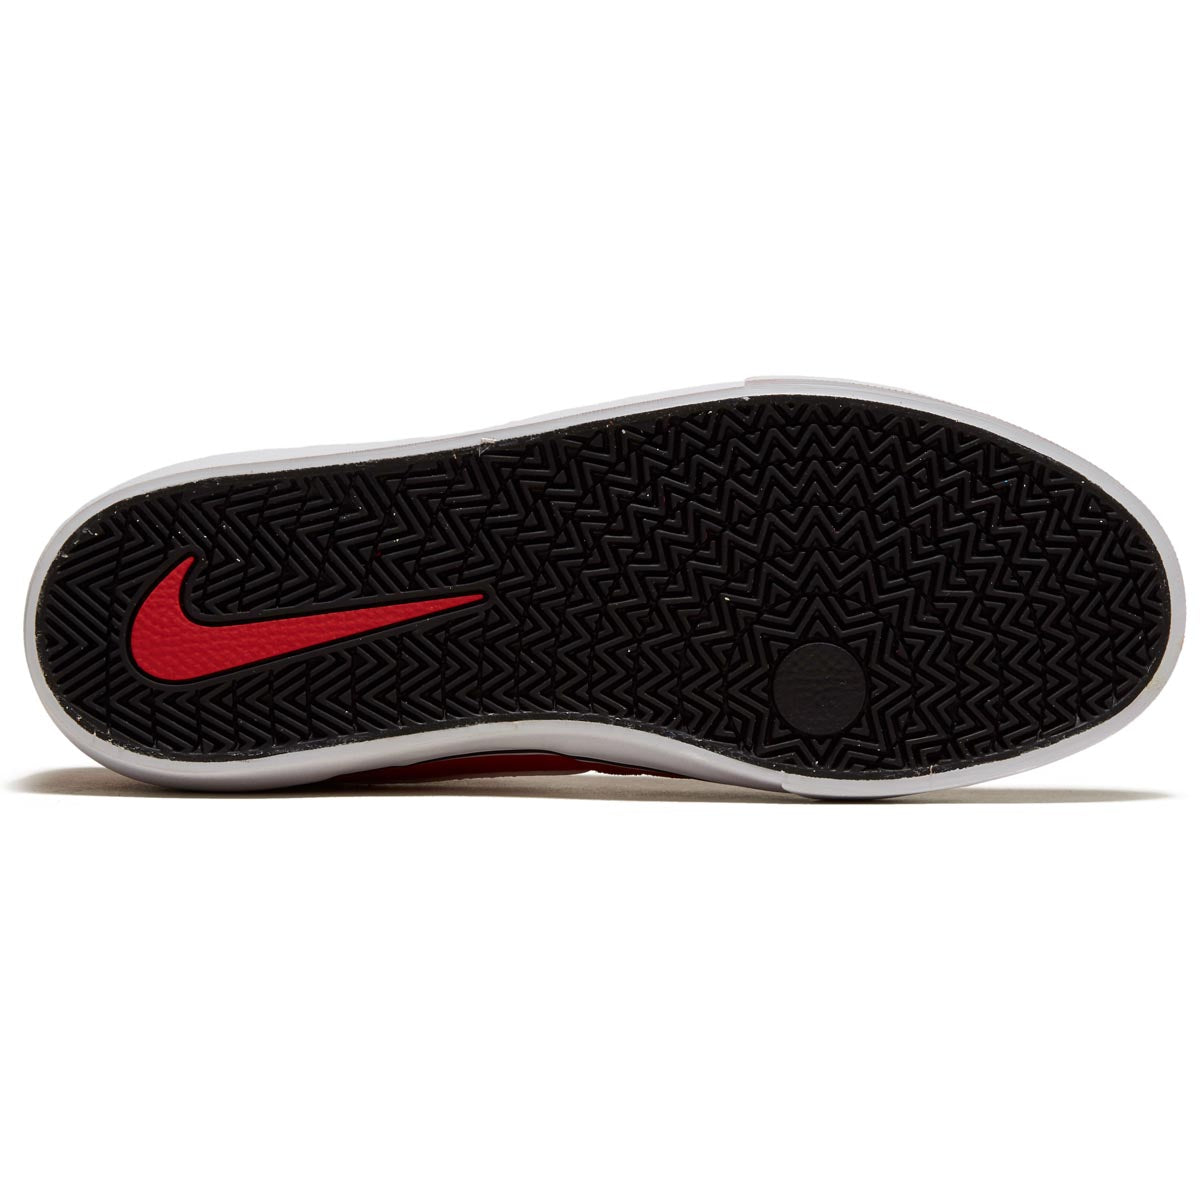 Nike SB Chron 2 Shoes - University Red/White/Black/White image 4